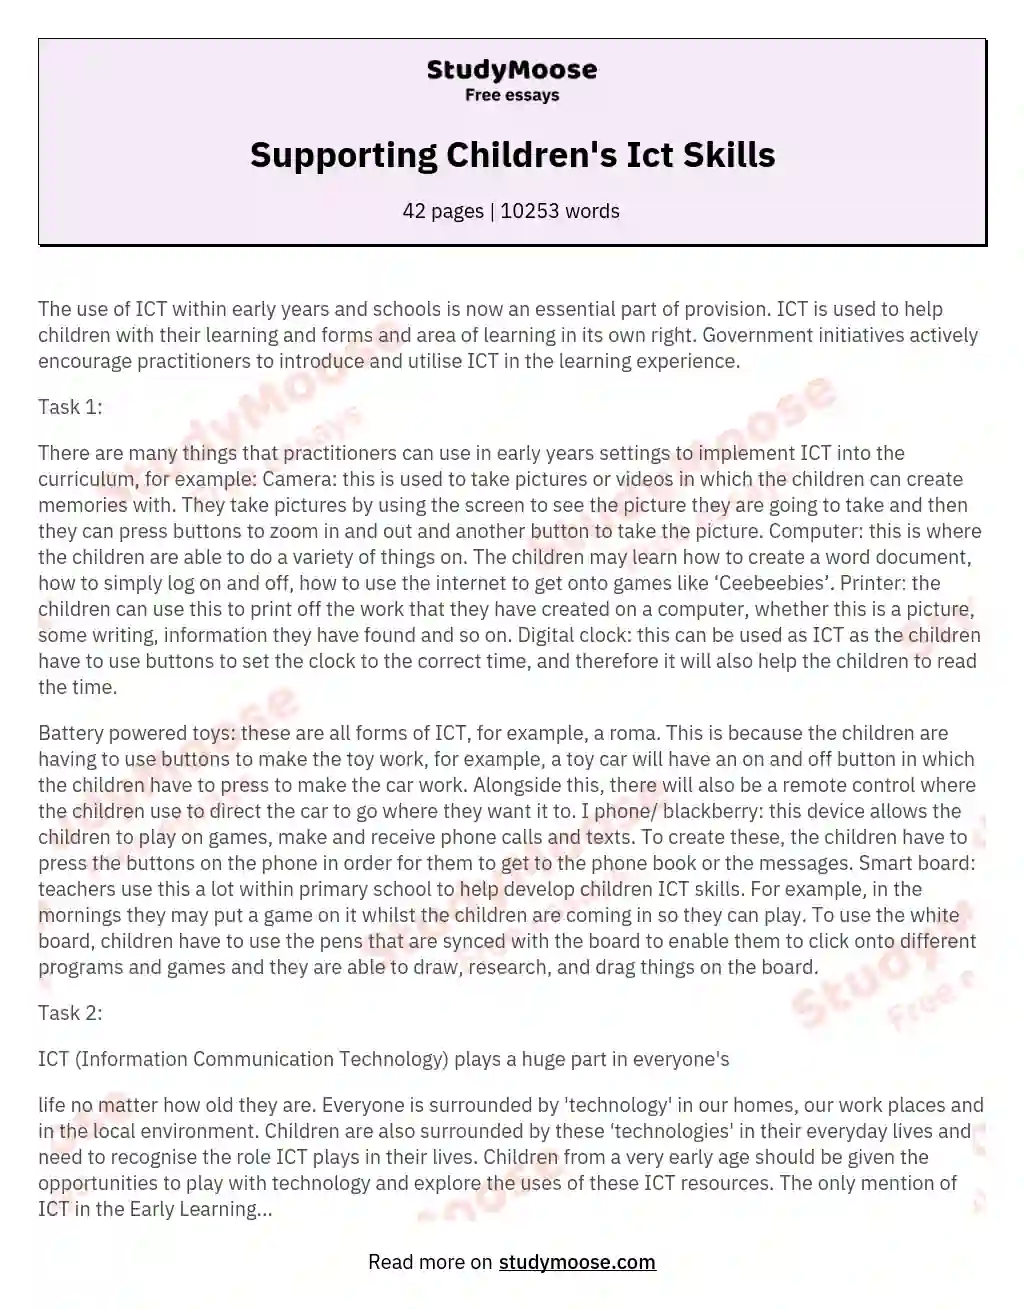 Supporting Children's Ict Skills essay